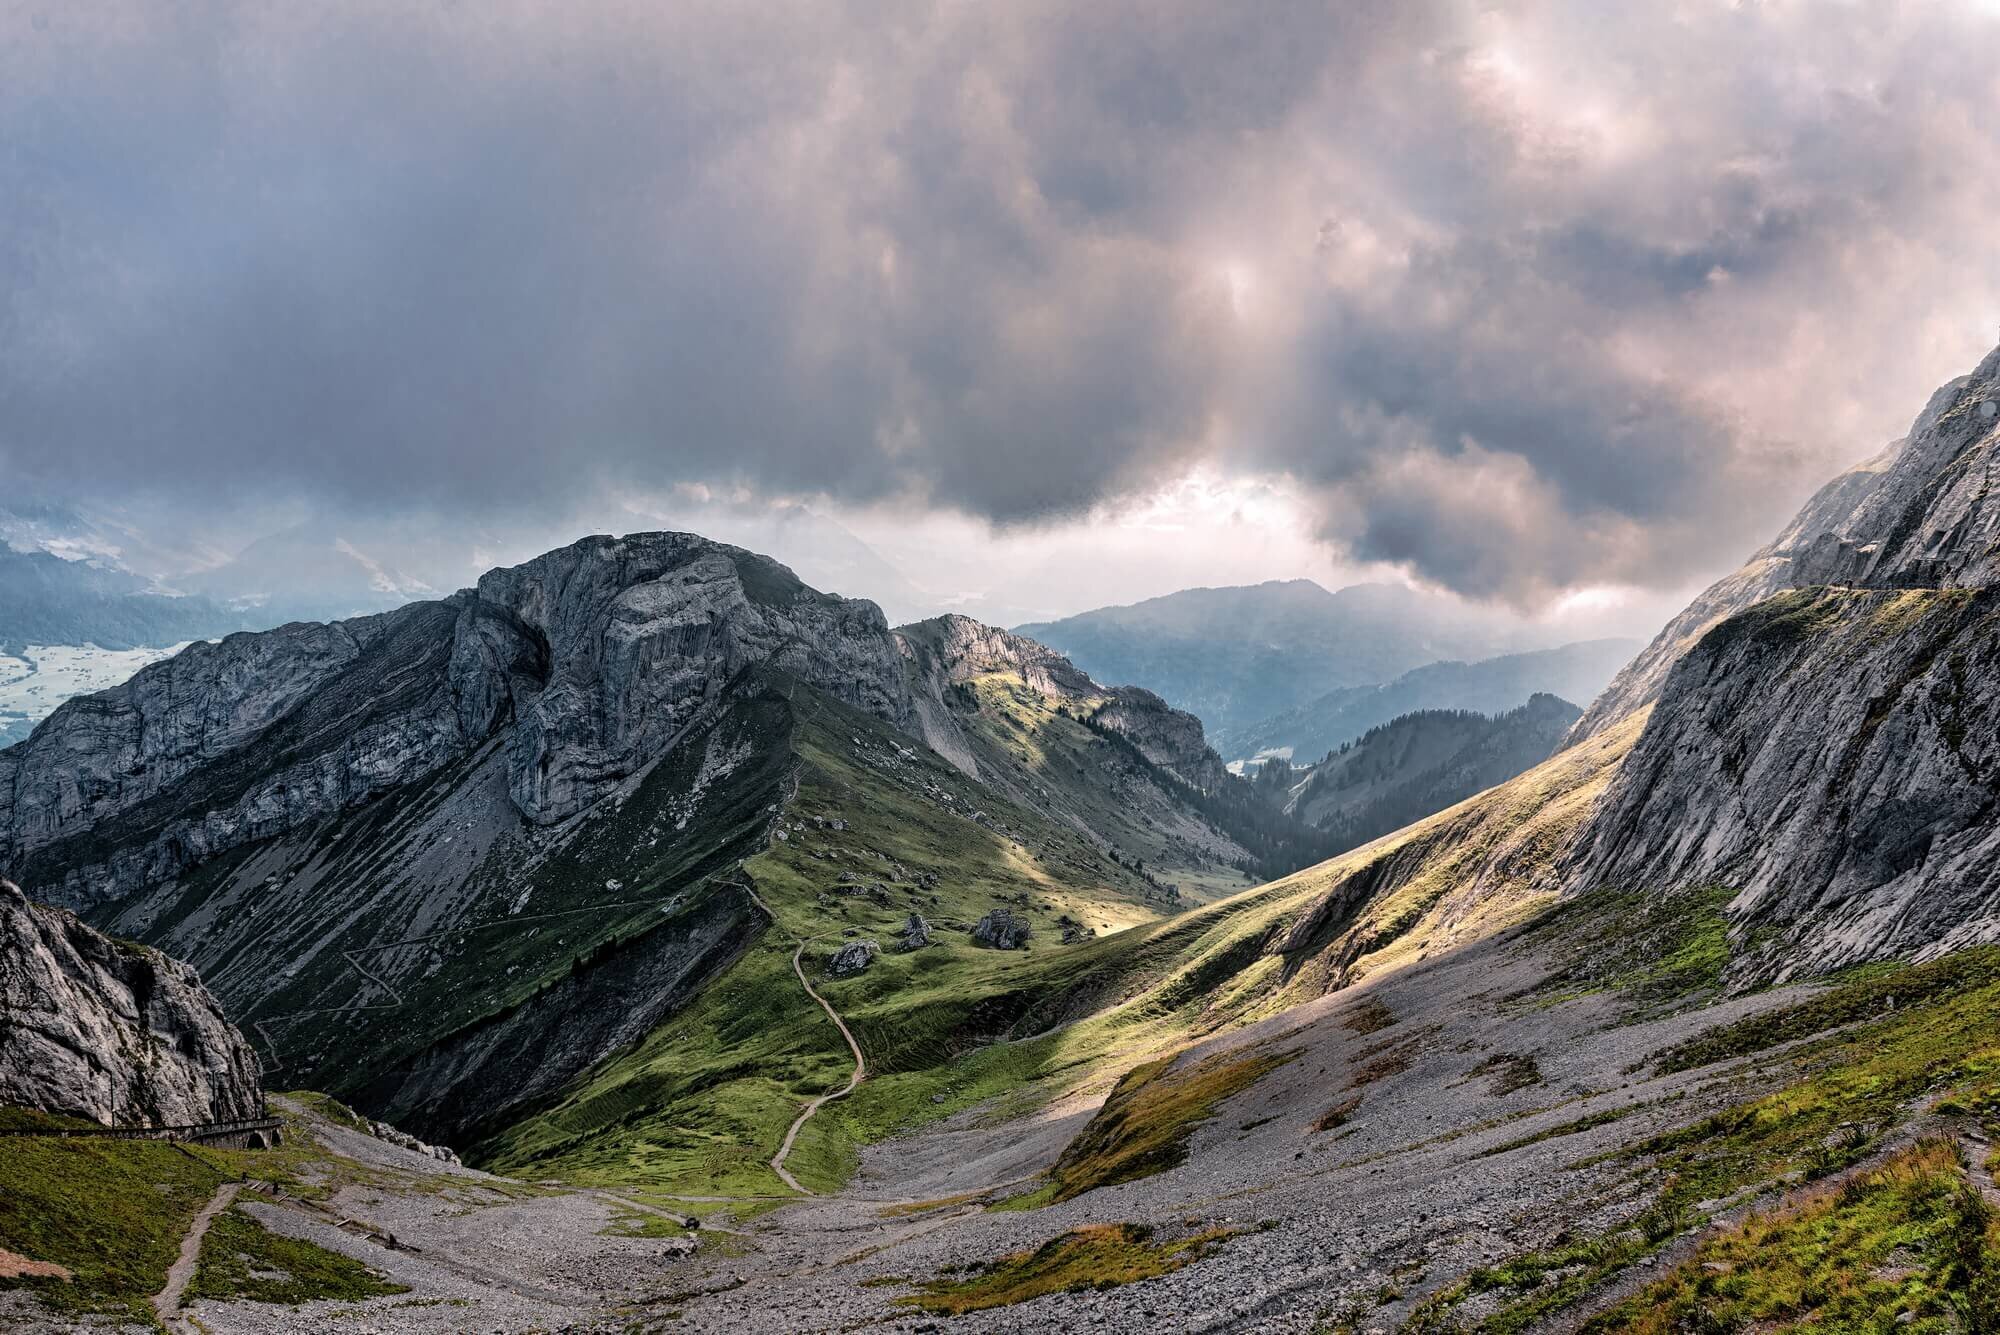 הר פילאטוס, שוויץ. צילום נוף : ניר רויטמן